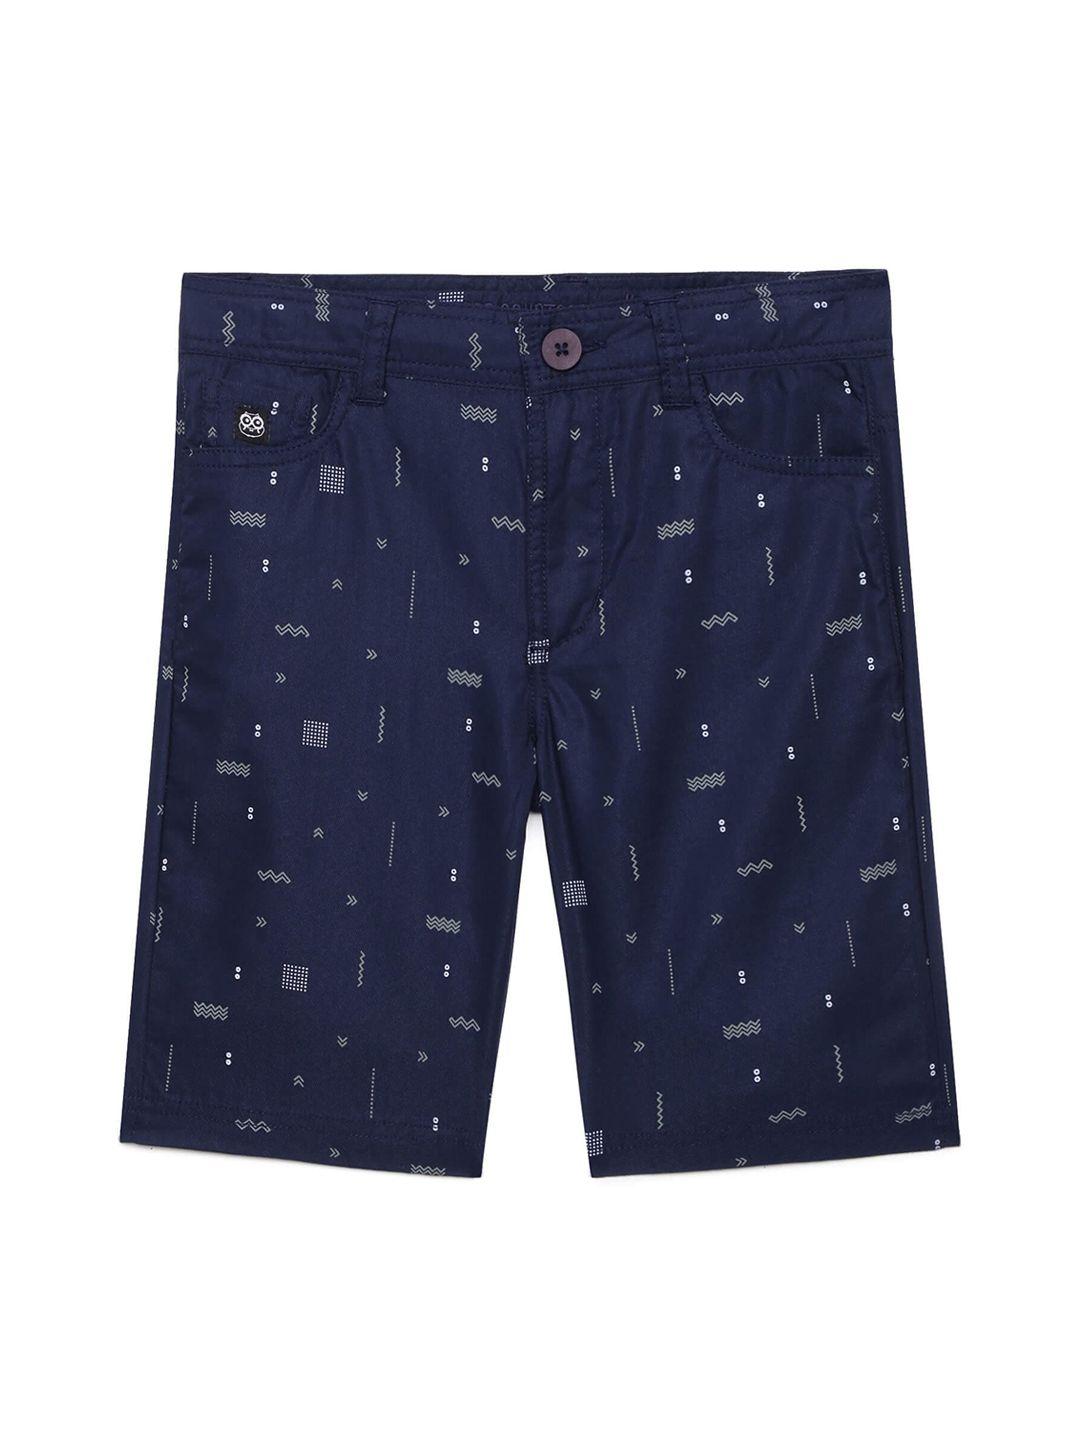 under fourteen only boys navy blue conversational printed cotton shorts